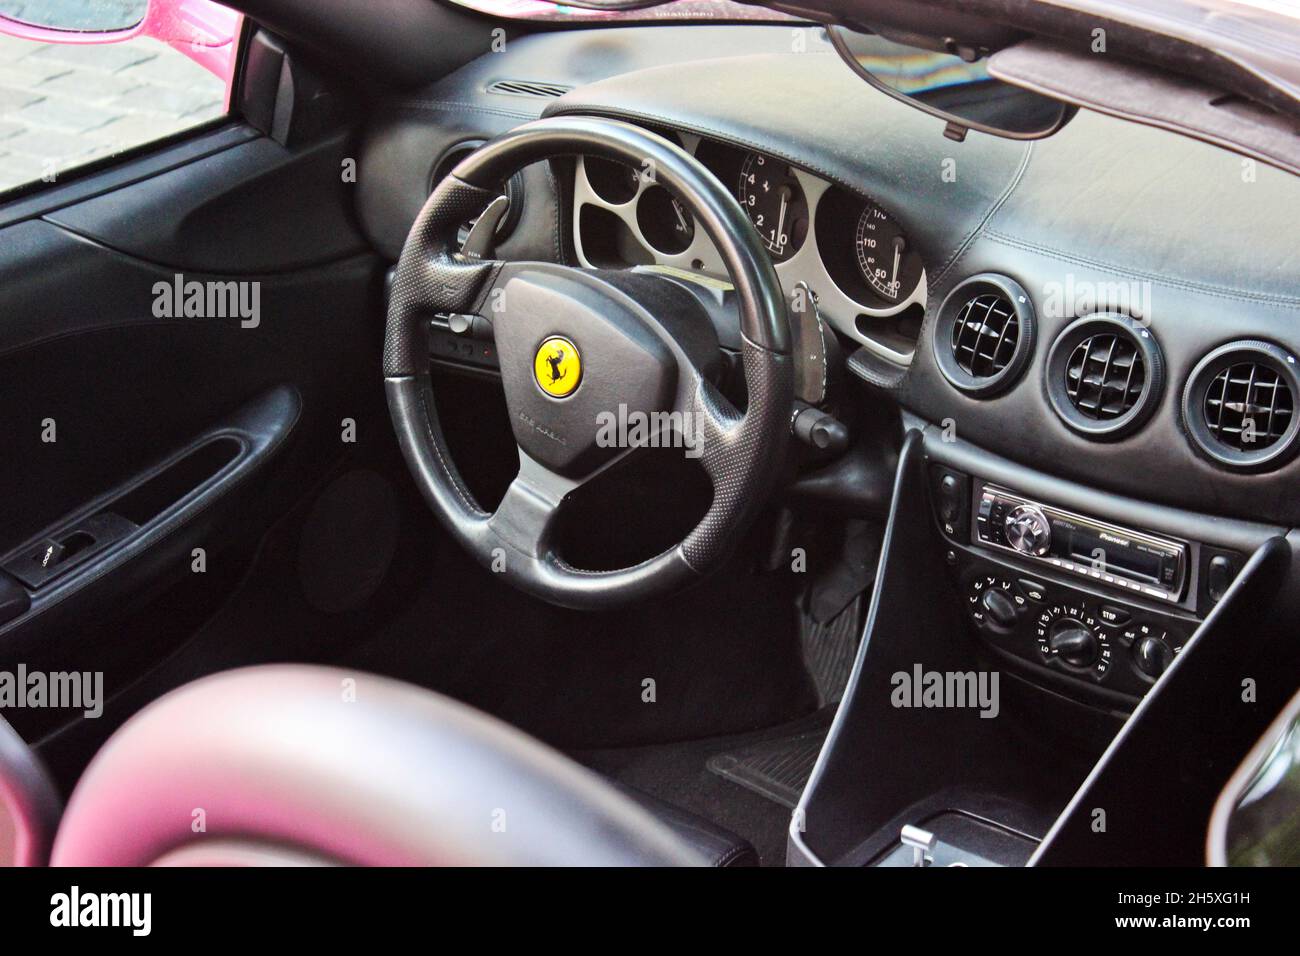 Kiev, Ukraine - June 1, 2013: Ferrari Modena F360 Spider Sbarro GT8.  View of the interior of a modern automobile showing the dashboard Stock Photo